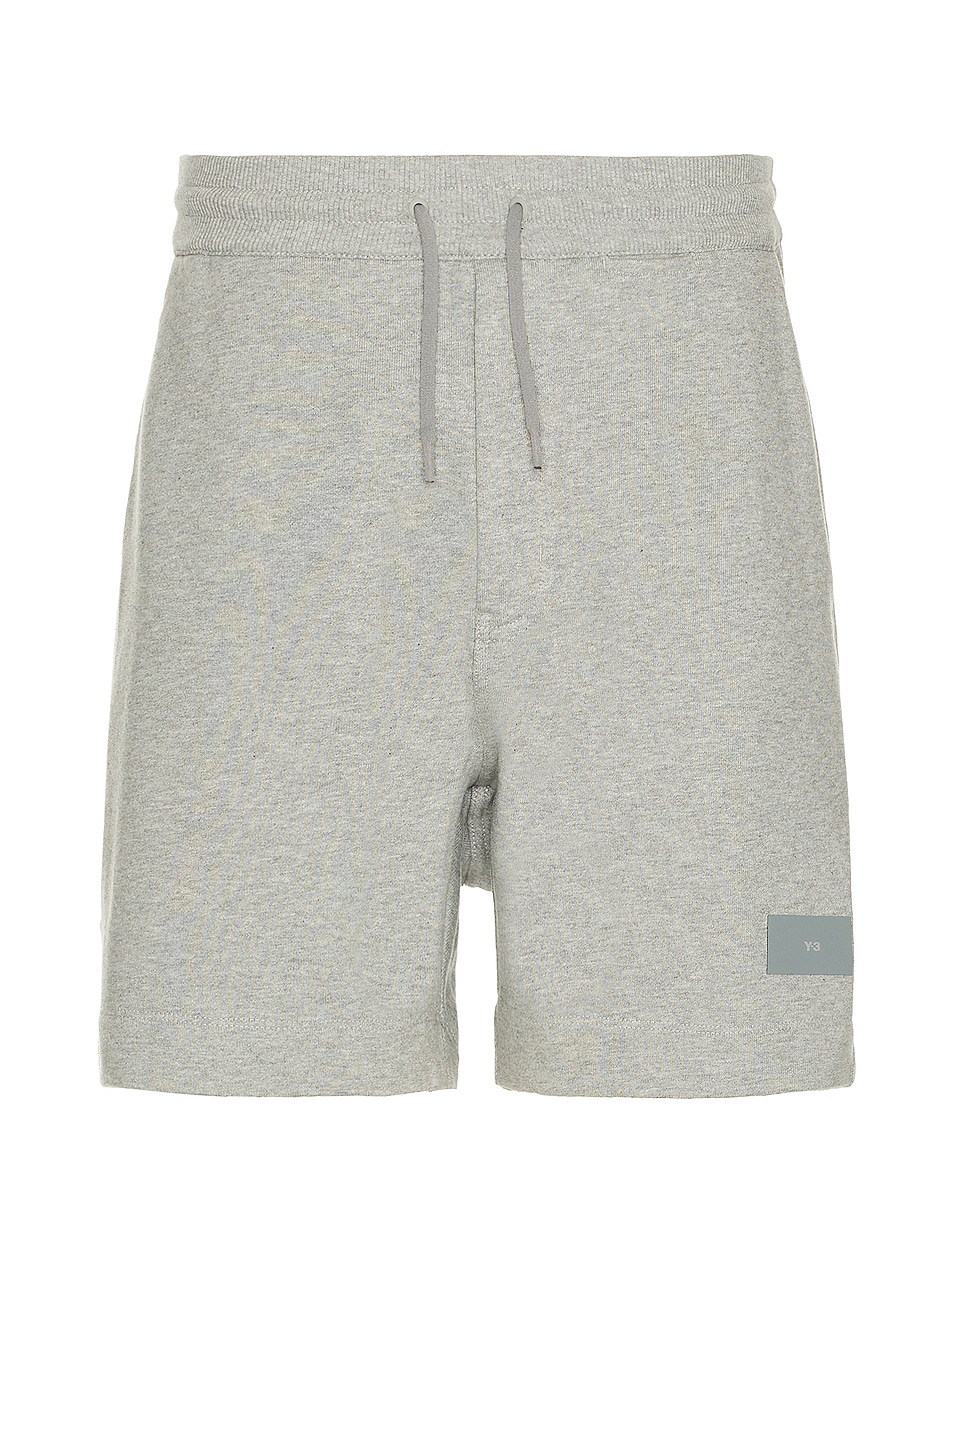 Image 1 of Y-3 Yohji Yamamoto Ft Shorts in Medium Grey Heather